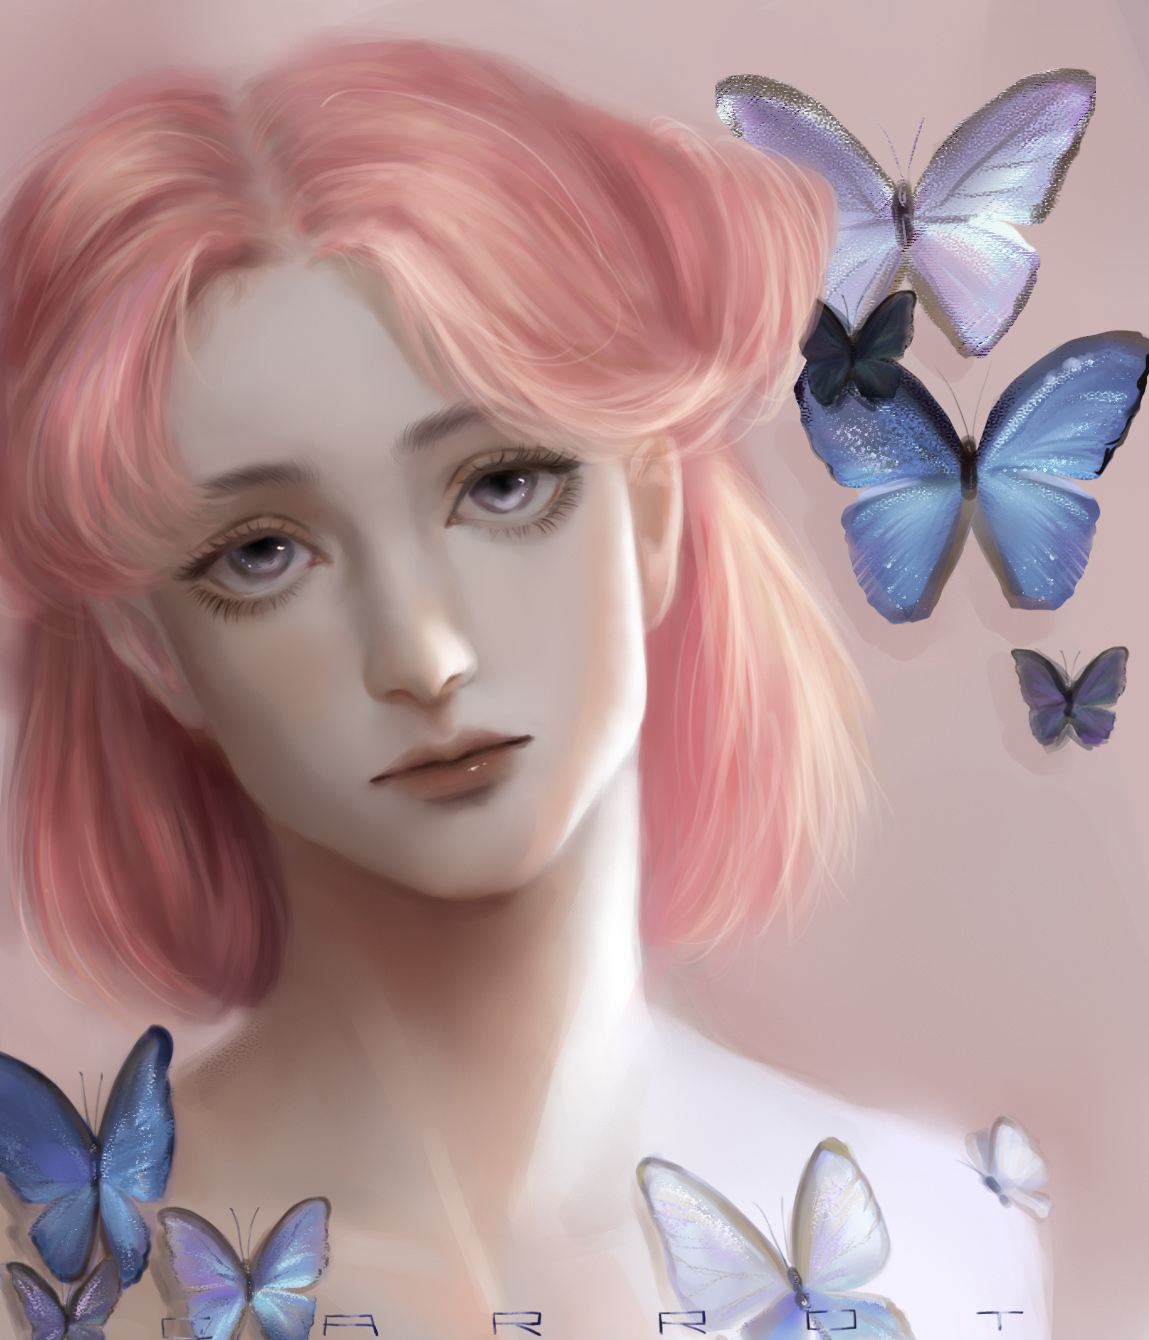 General 1149x1340 fantasy girl pink hair butterfly looking at viewer digital art